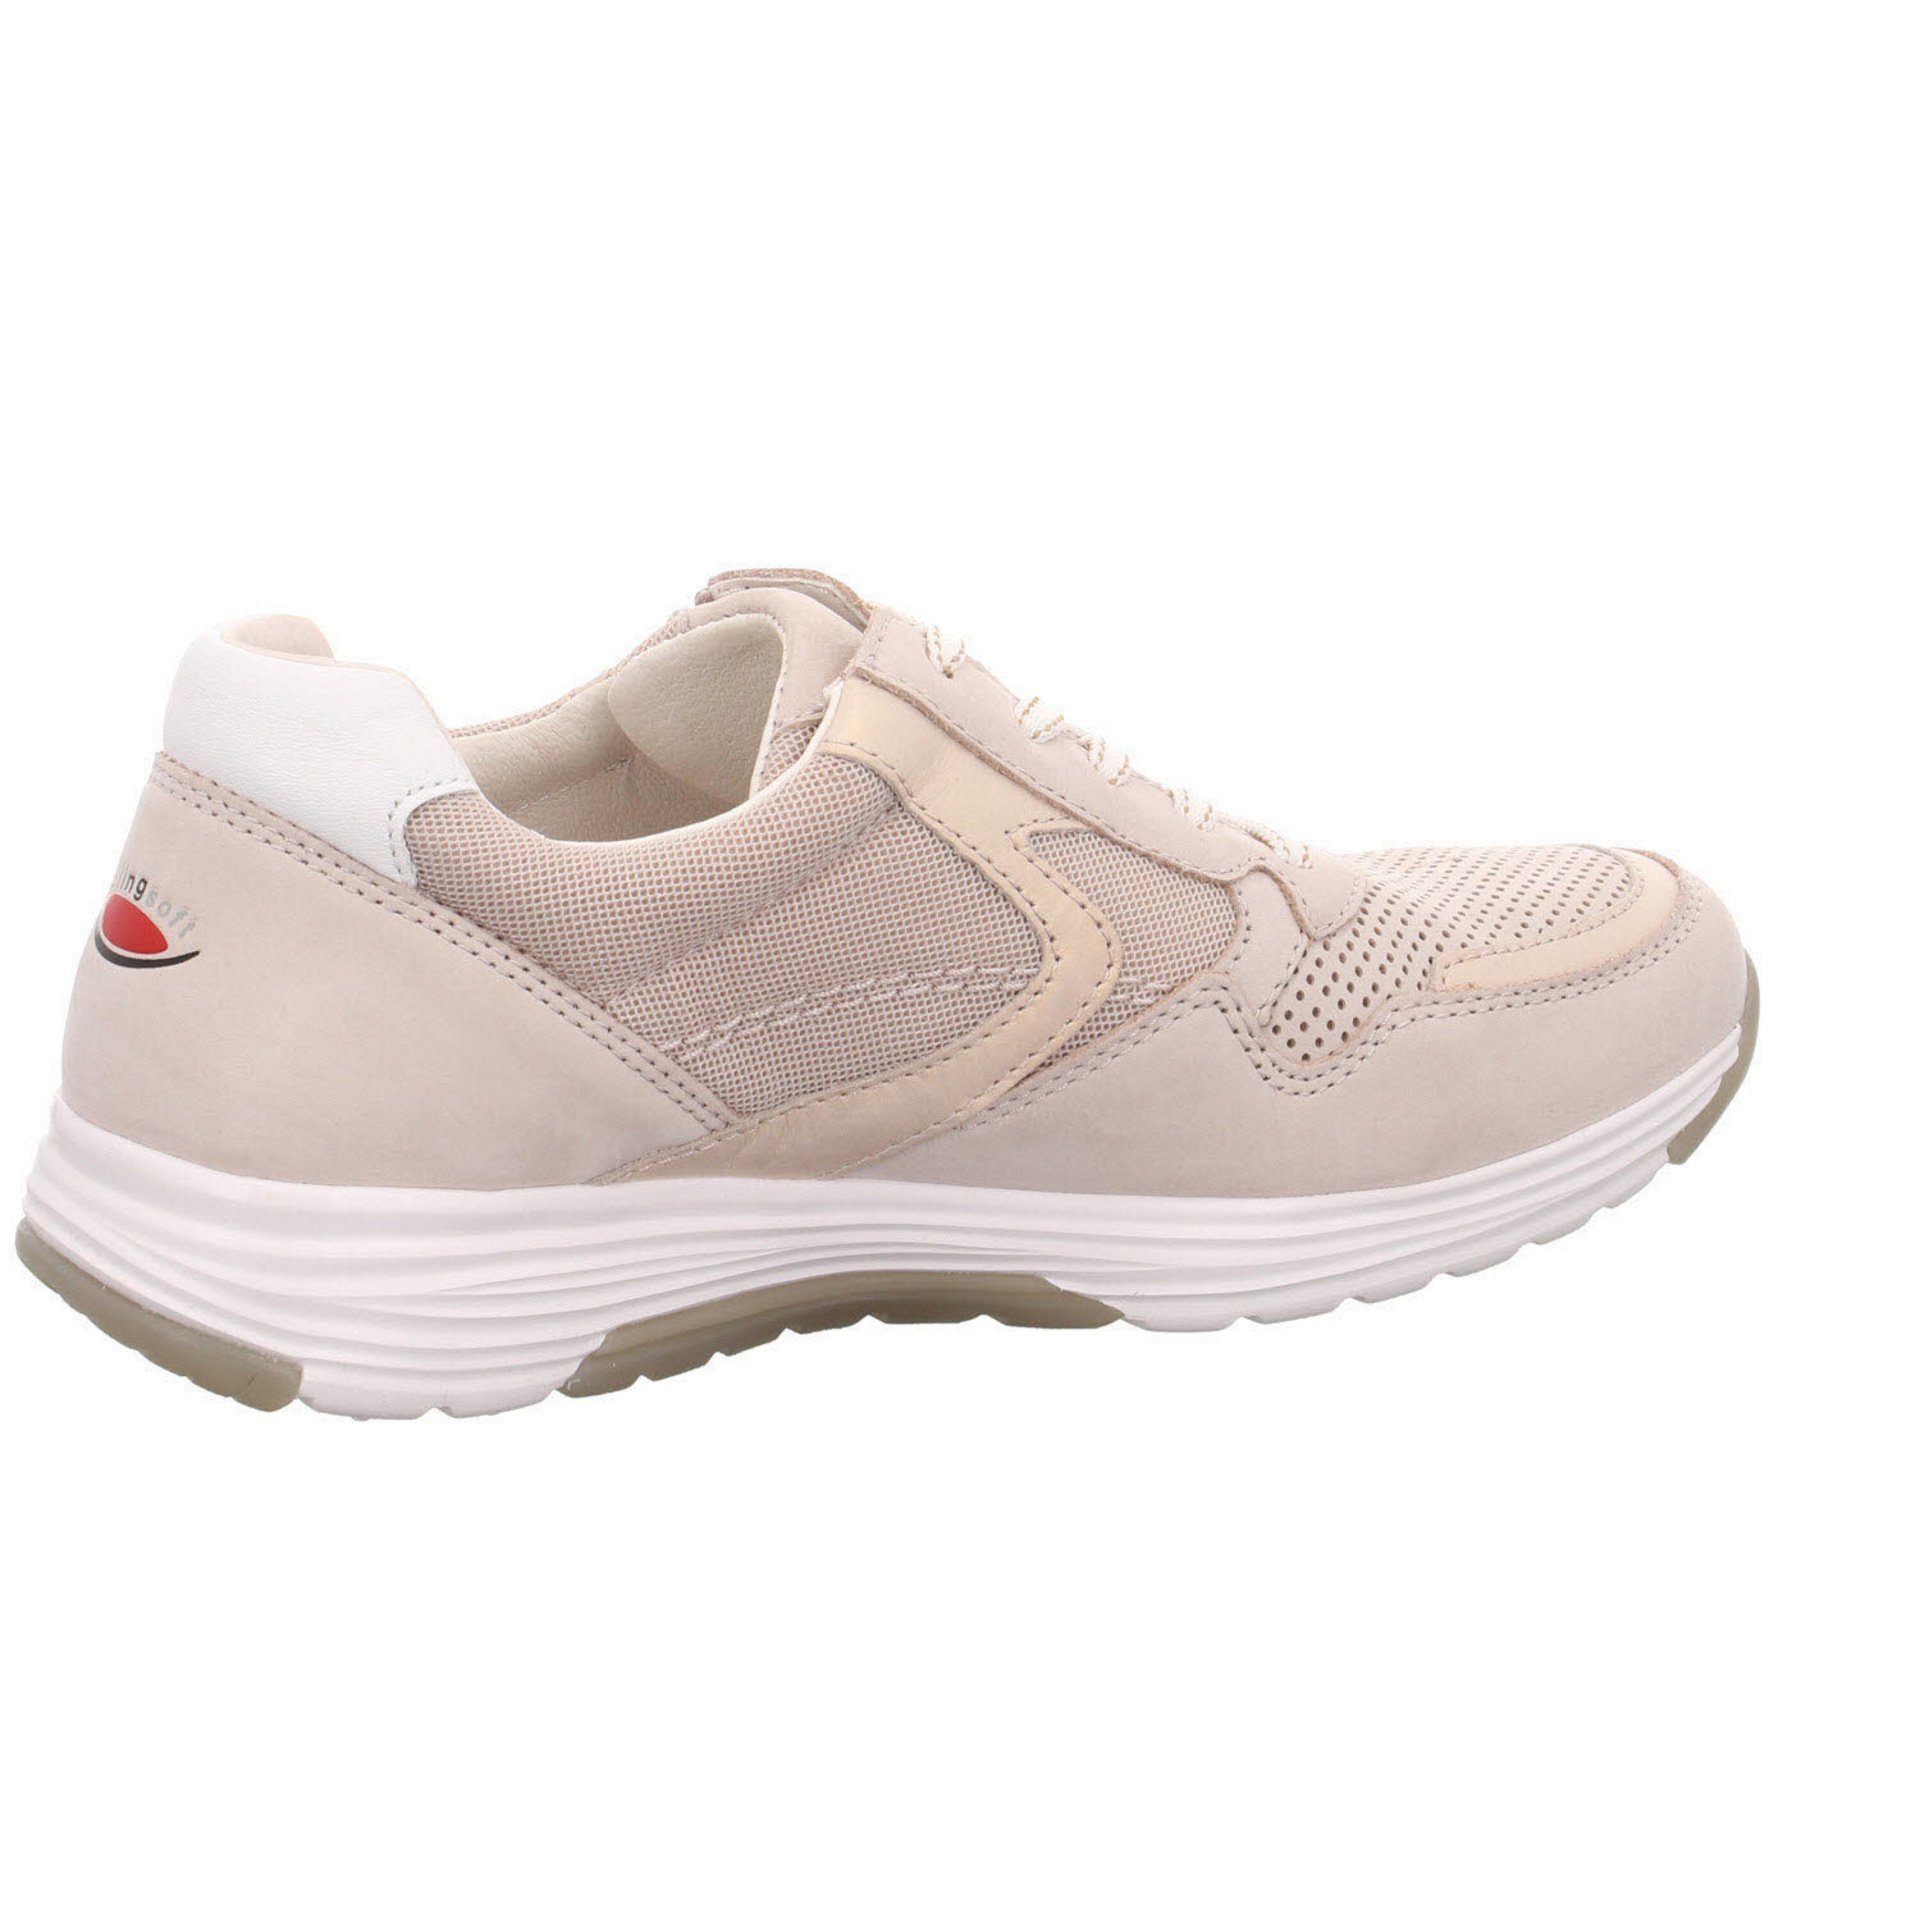 Sneaker Schuhe (puder.weiss) Schnürschuh Damen Beige Gabor Sneaker Rollingsoft Leder-/Textilkombination